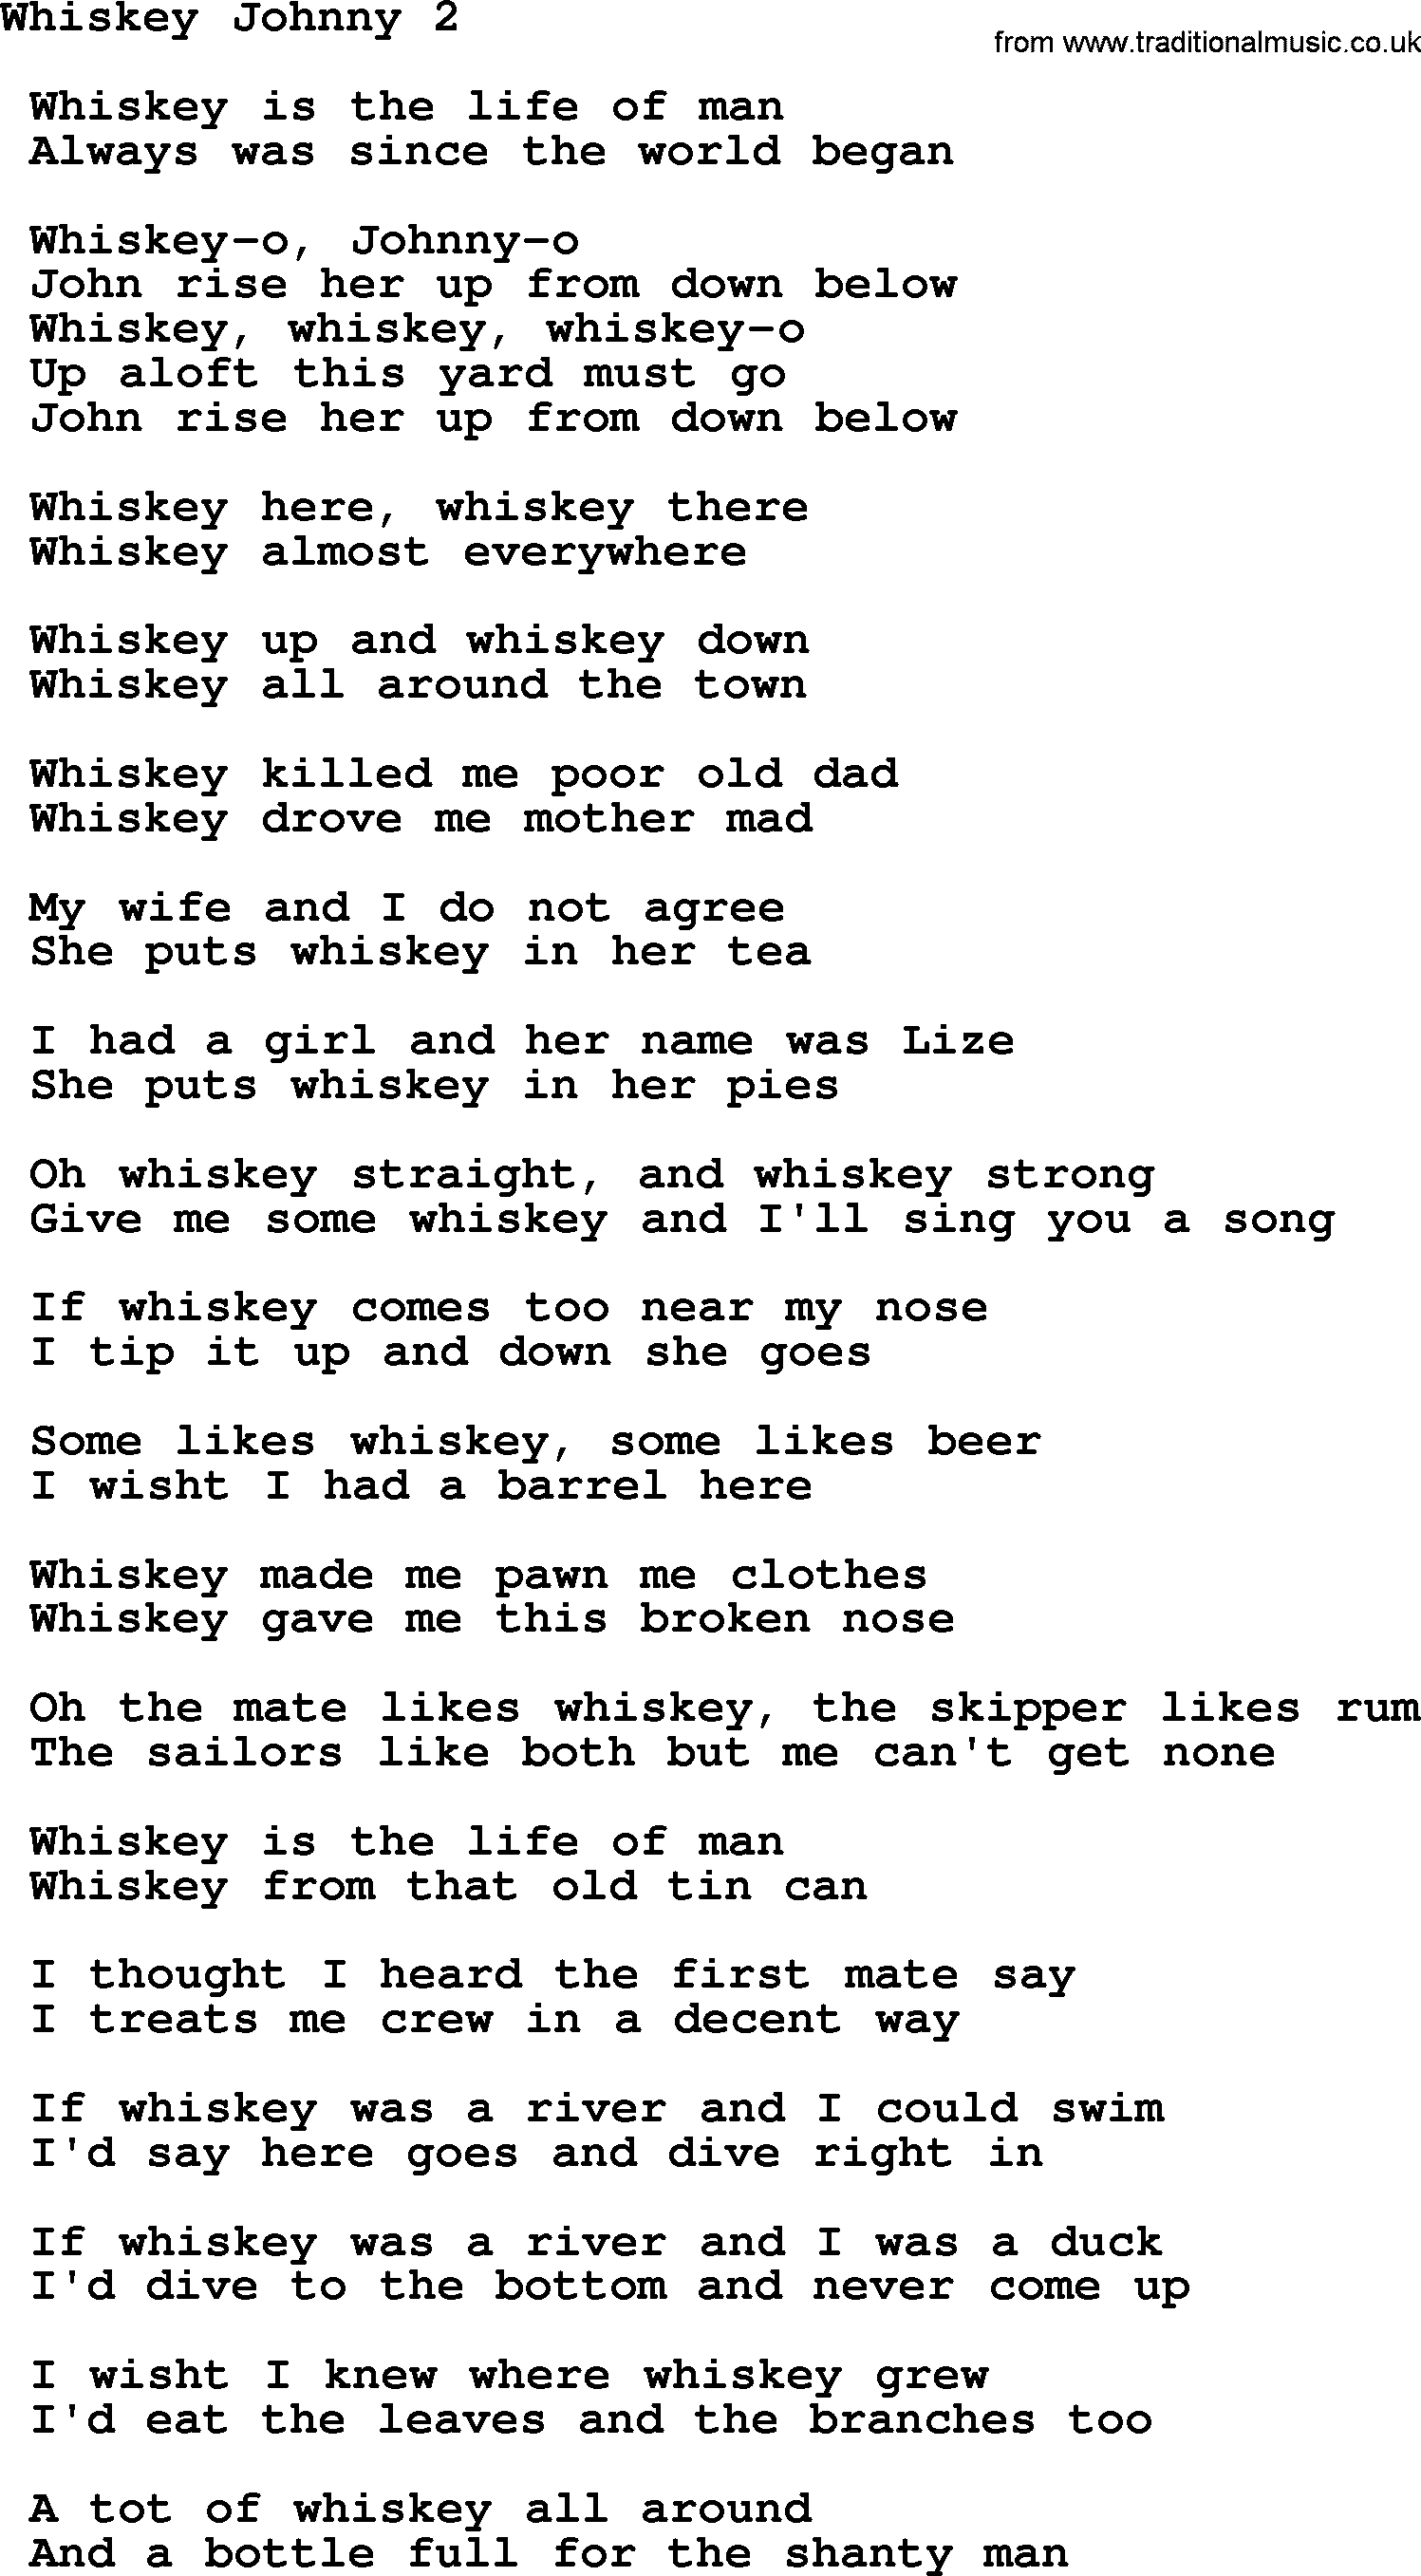 Sea Song or Shantie: Whiskey Johnny 2, lyrics